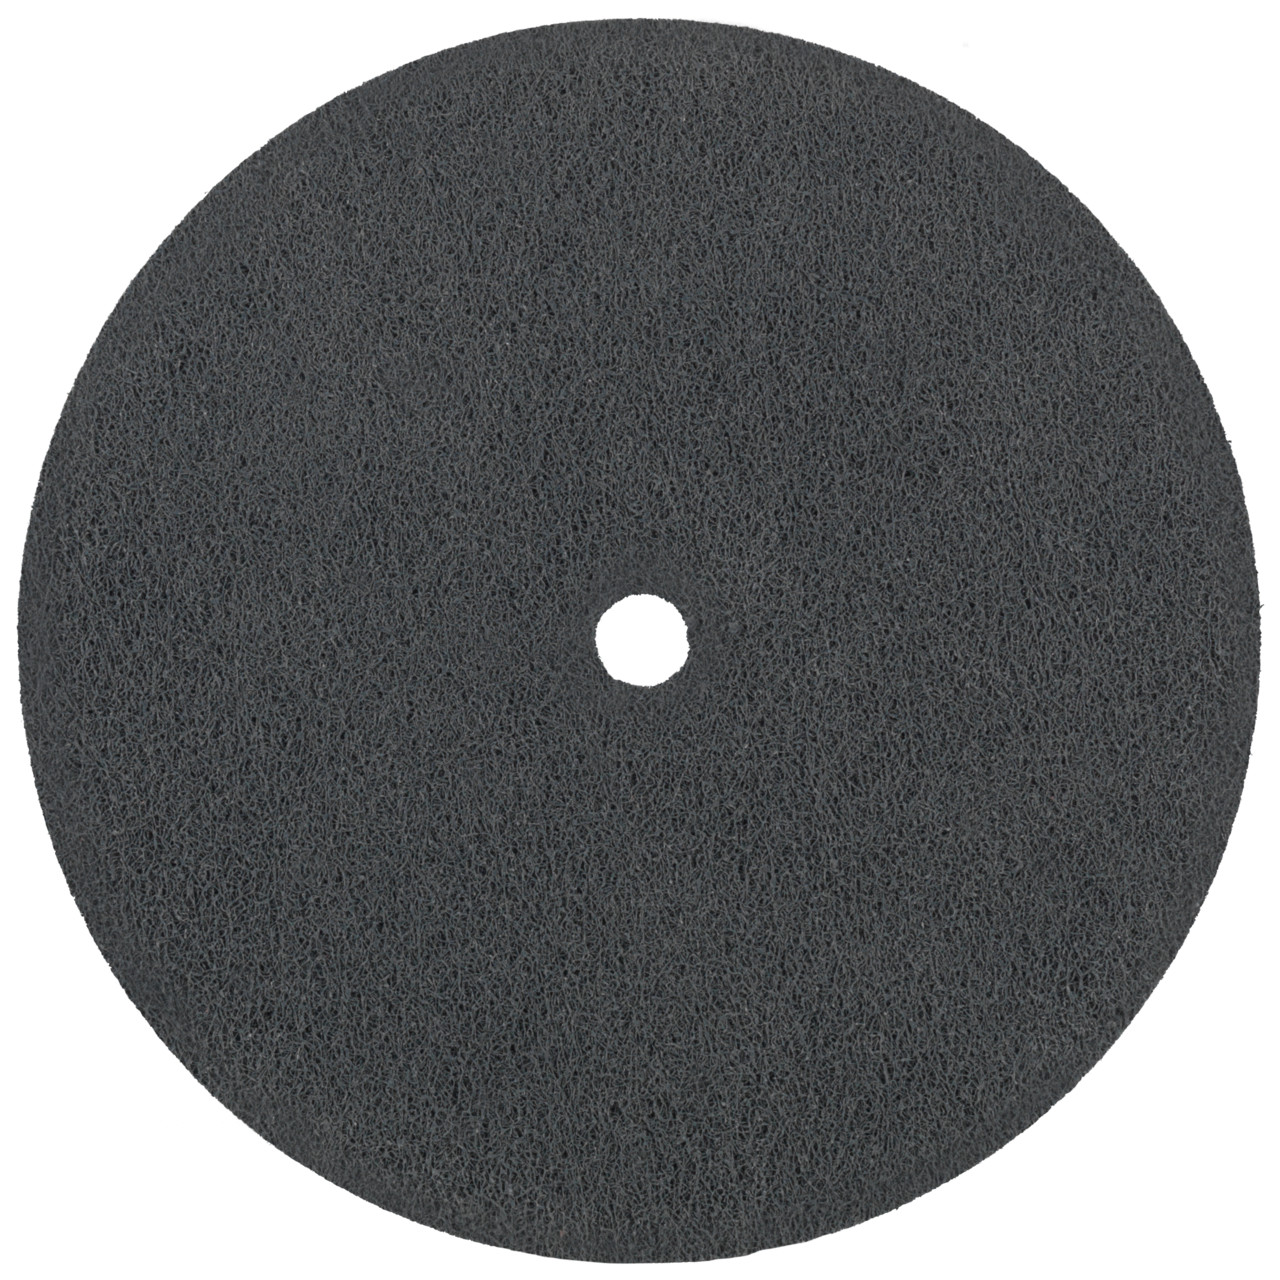 Tyrolit Discos compactos prensados DxDxH 152x25x25,4 Inserto universal, 3 C FEIN, forma: 1, Art. 34190306